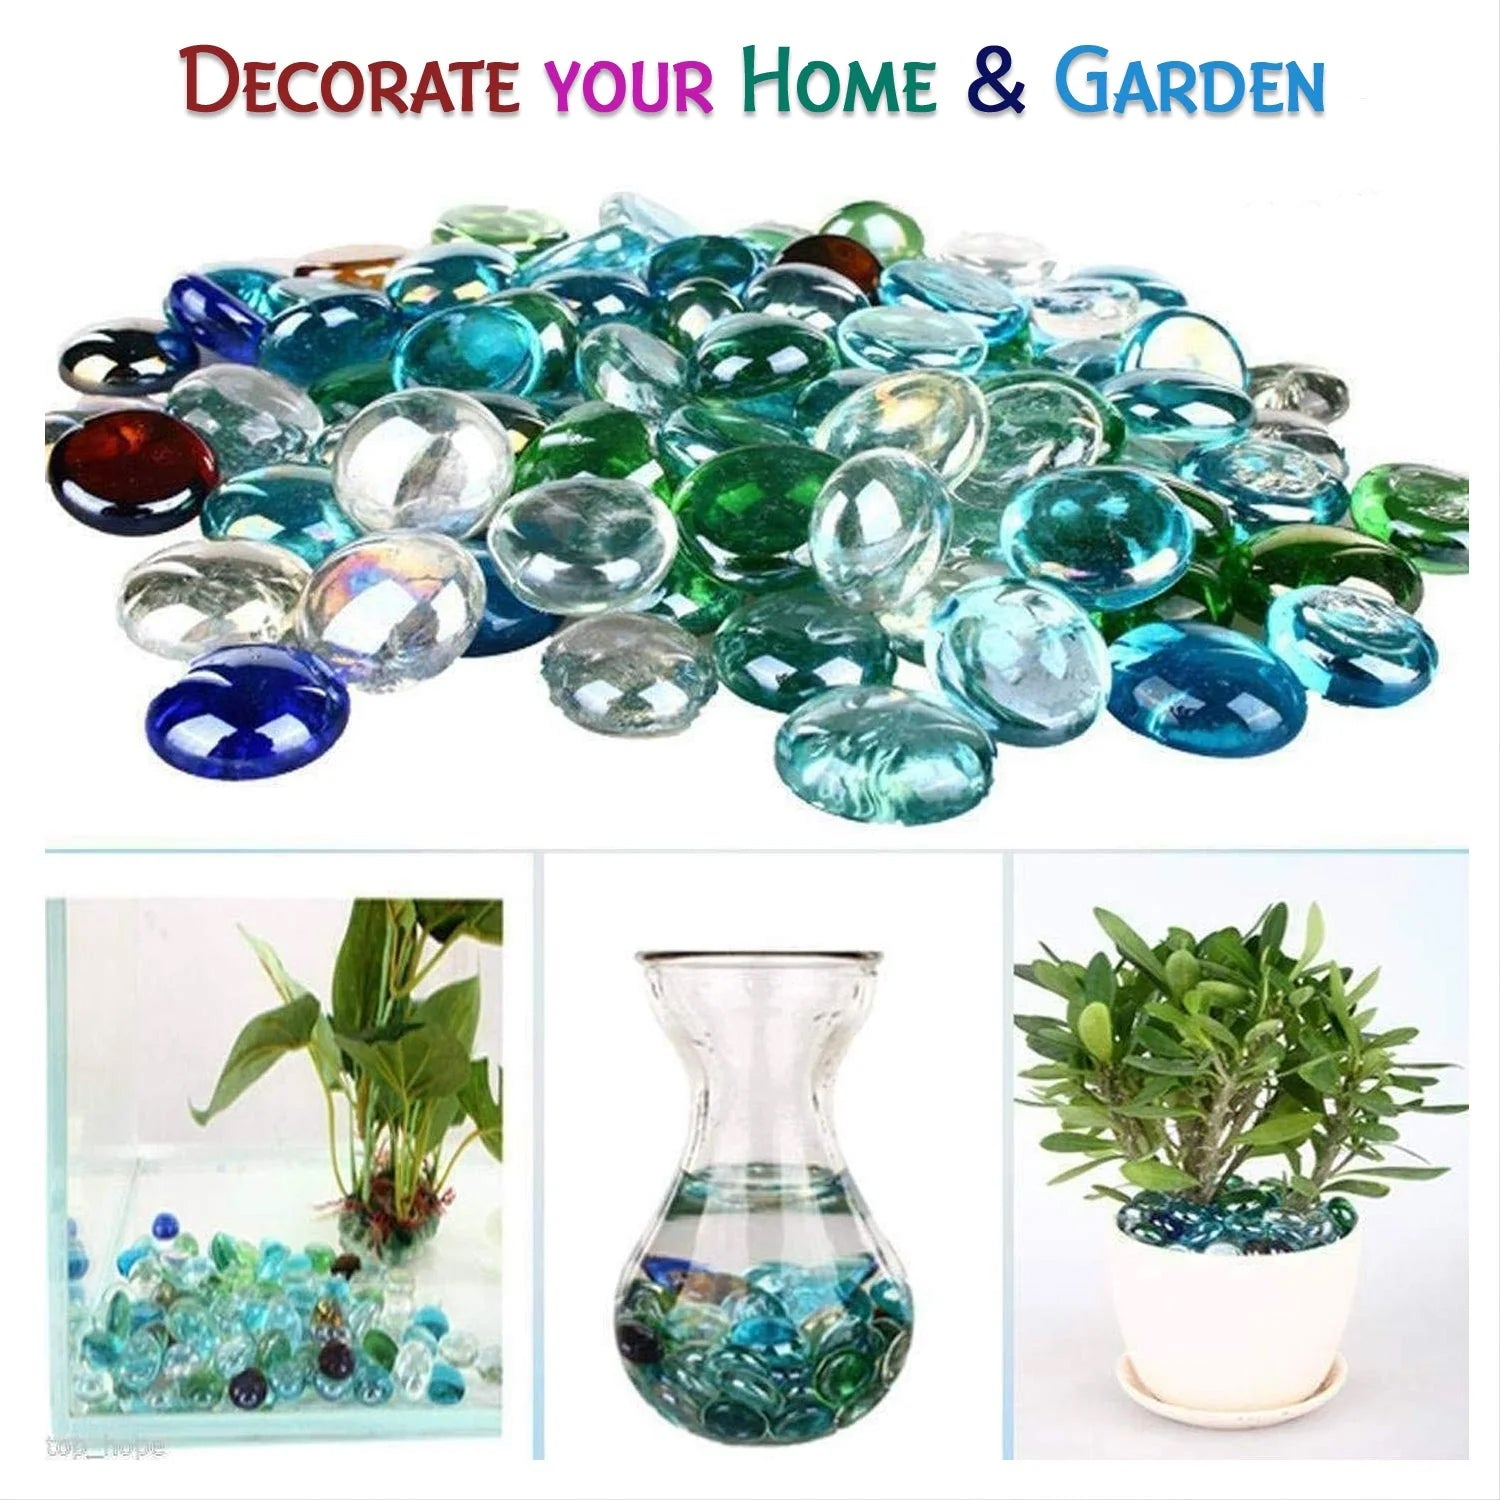 Multi-Color Decorative Stone for Garden / Lawn / Aquarium Fish Tank Gravel / Flower Pots Decoration Pebbles for Fish Bowl & All Purpose Attractive Stone Set